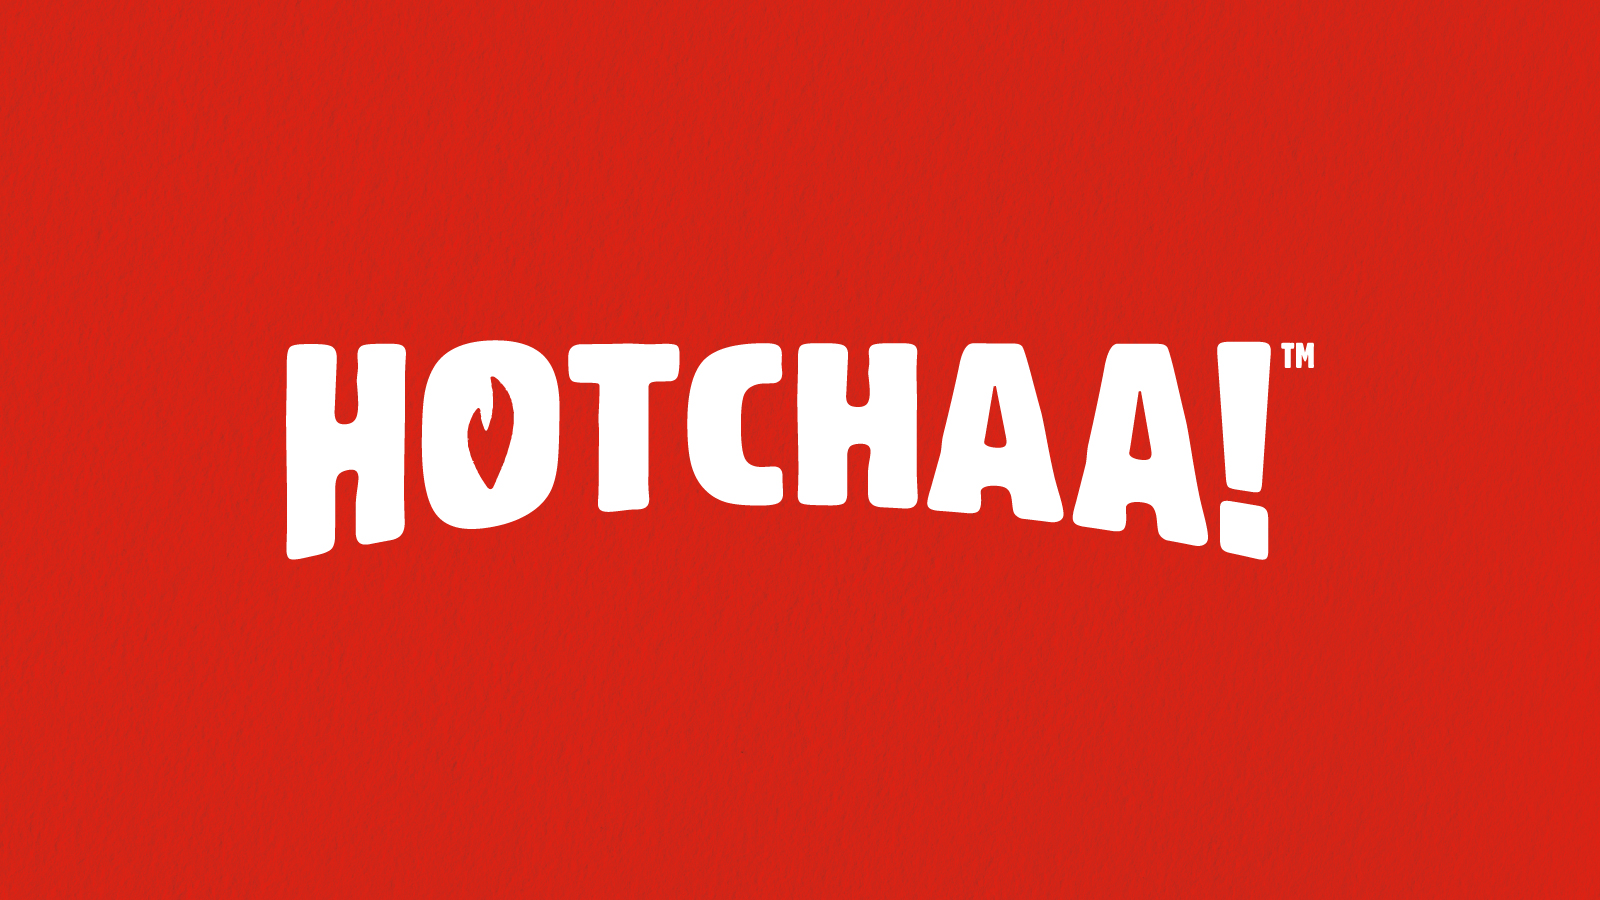 Hotchaa! Branding And Packaging Design